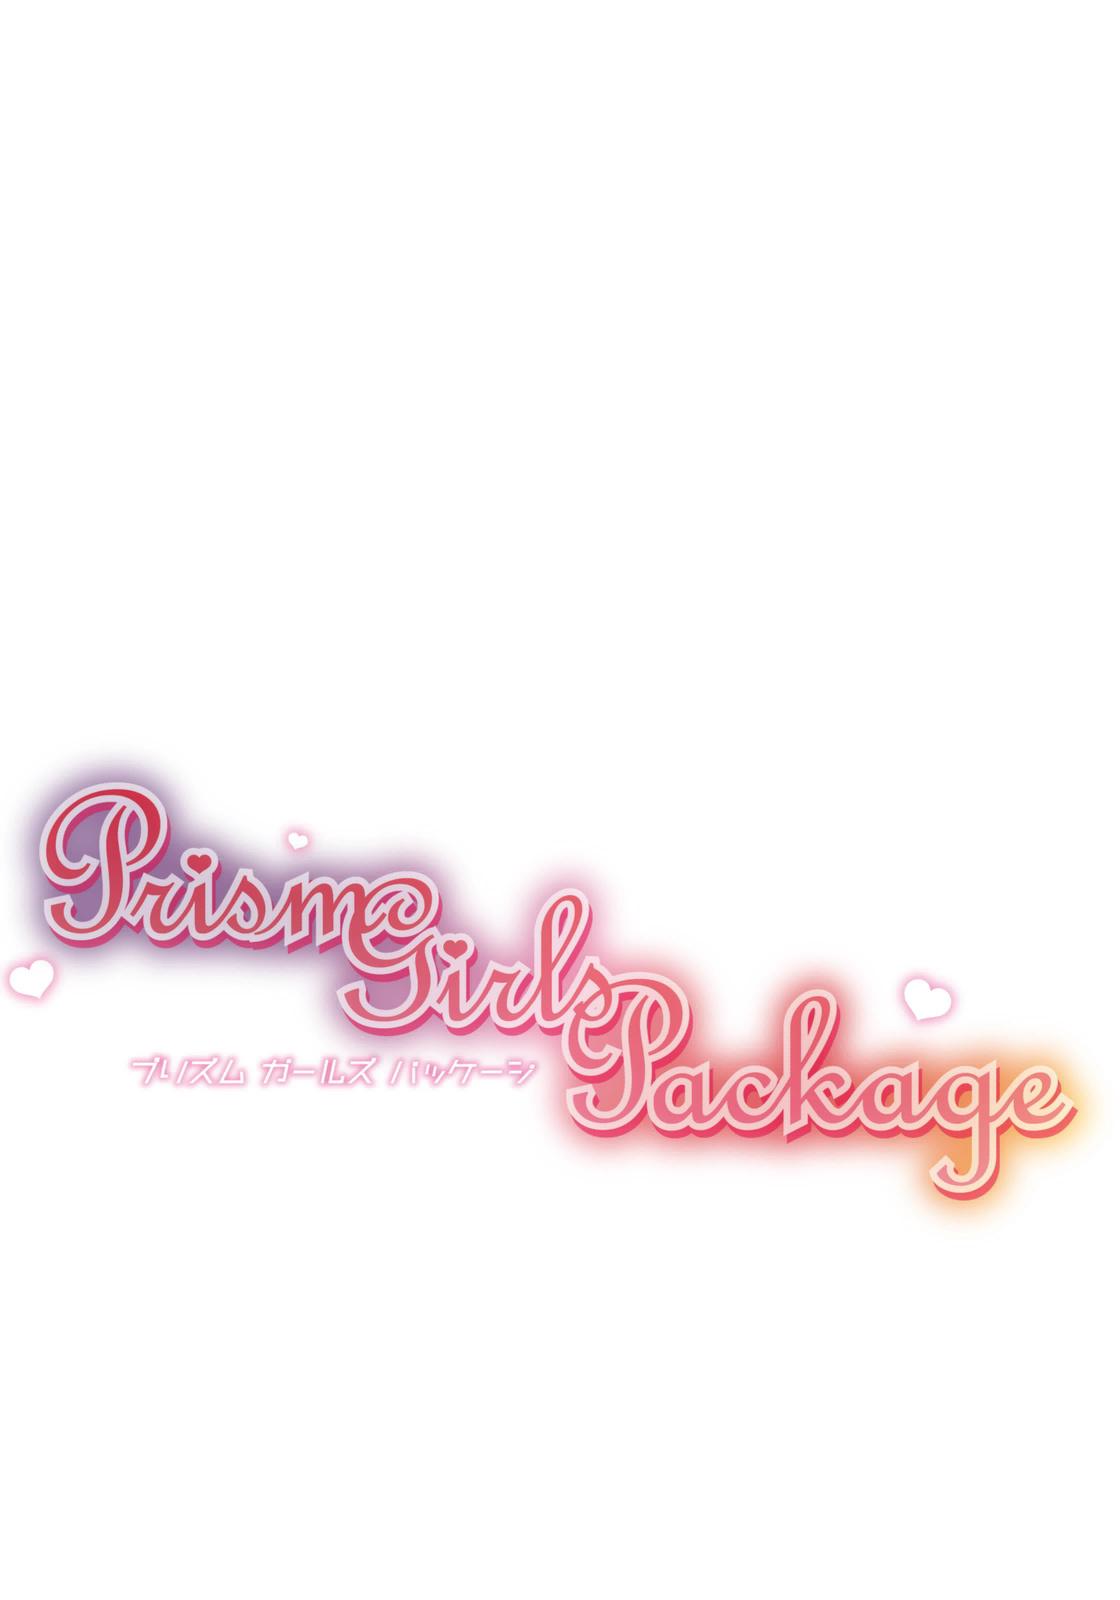 Prisme Girls Package 2